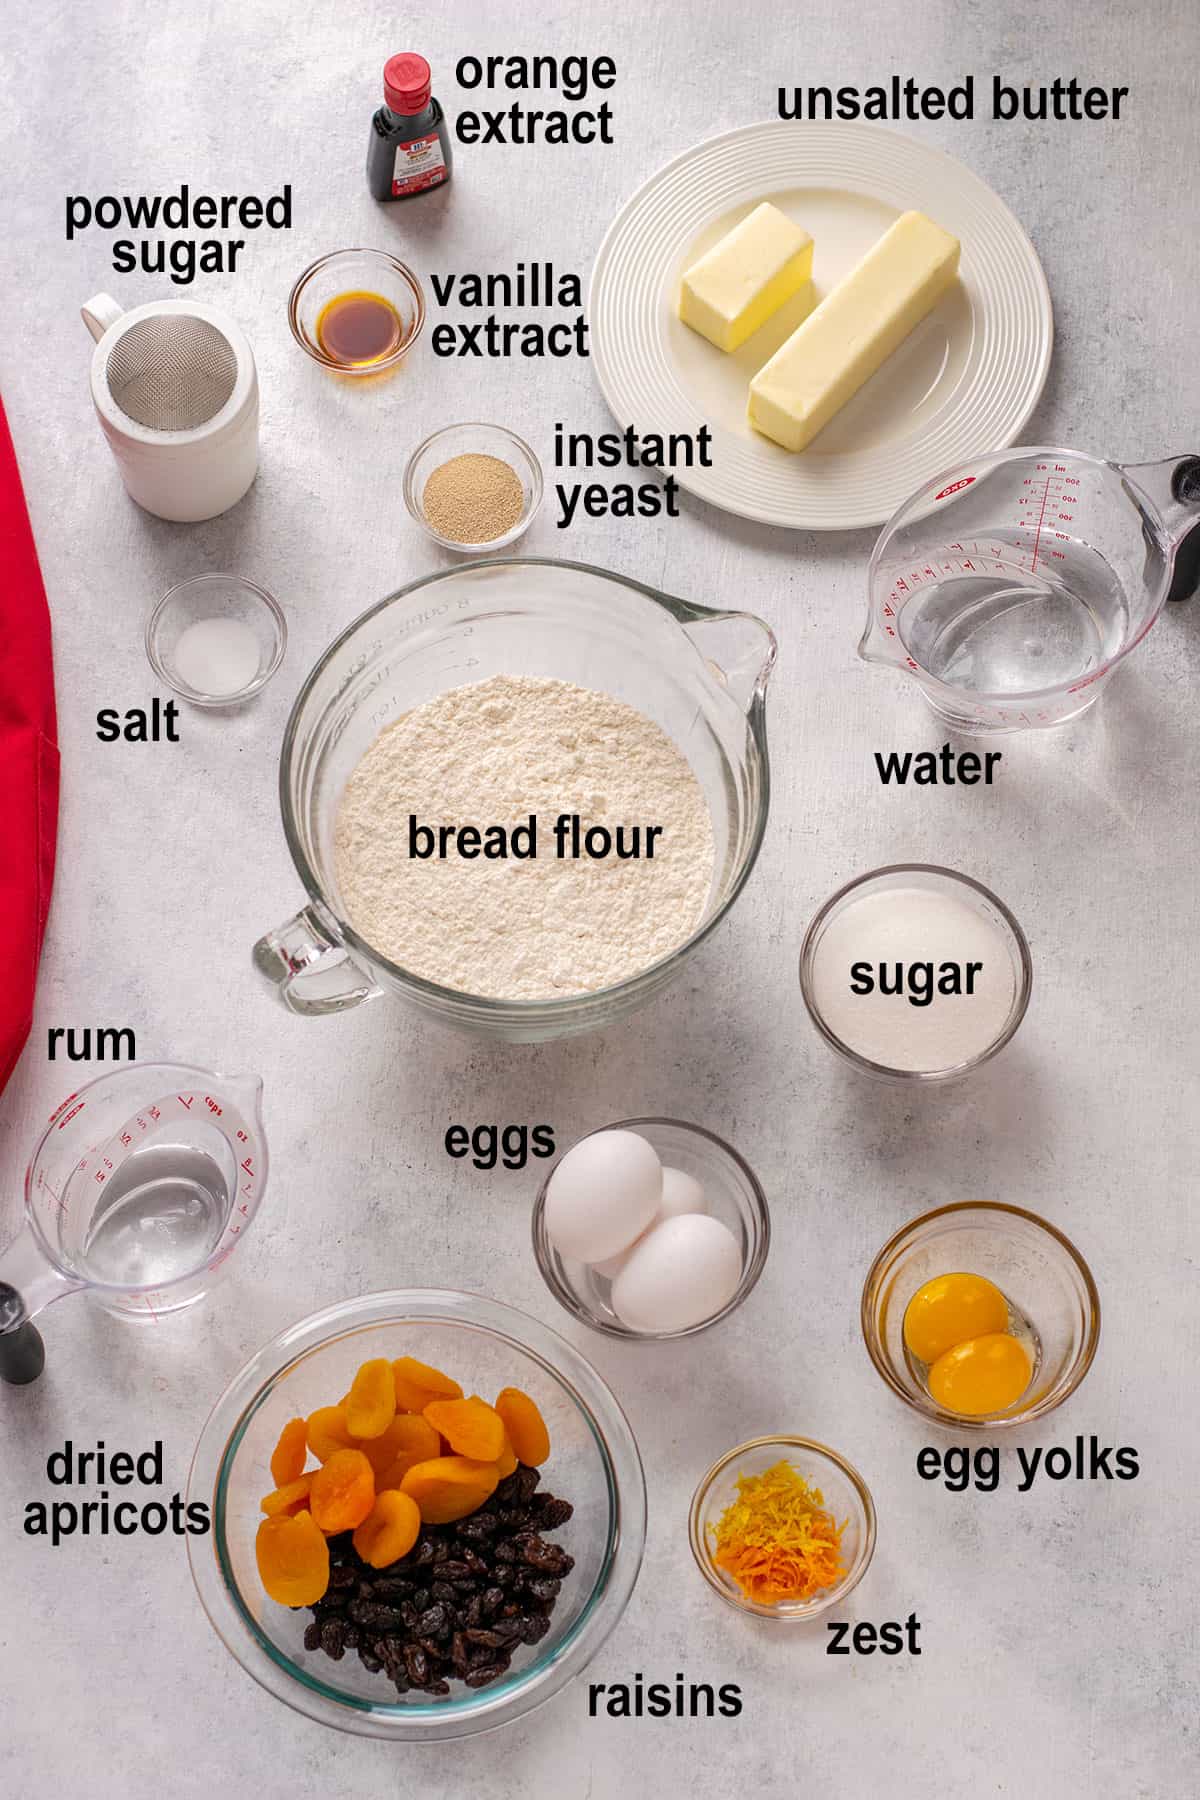 orange & vanilla extract, sugar, butter, flour, yeast, salt, water, rum, eggs, fruit